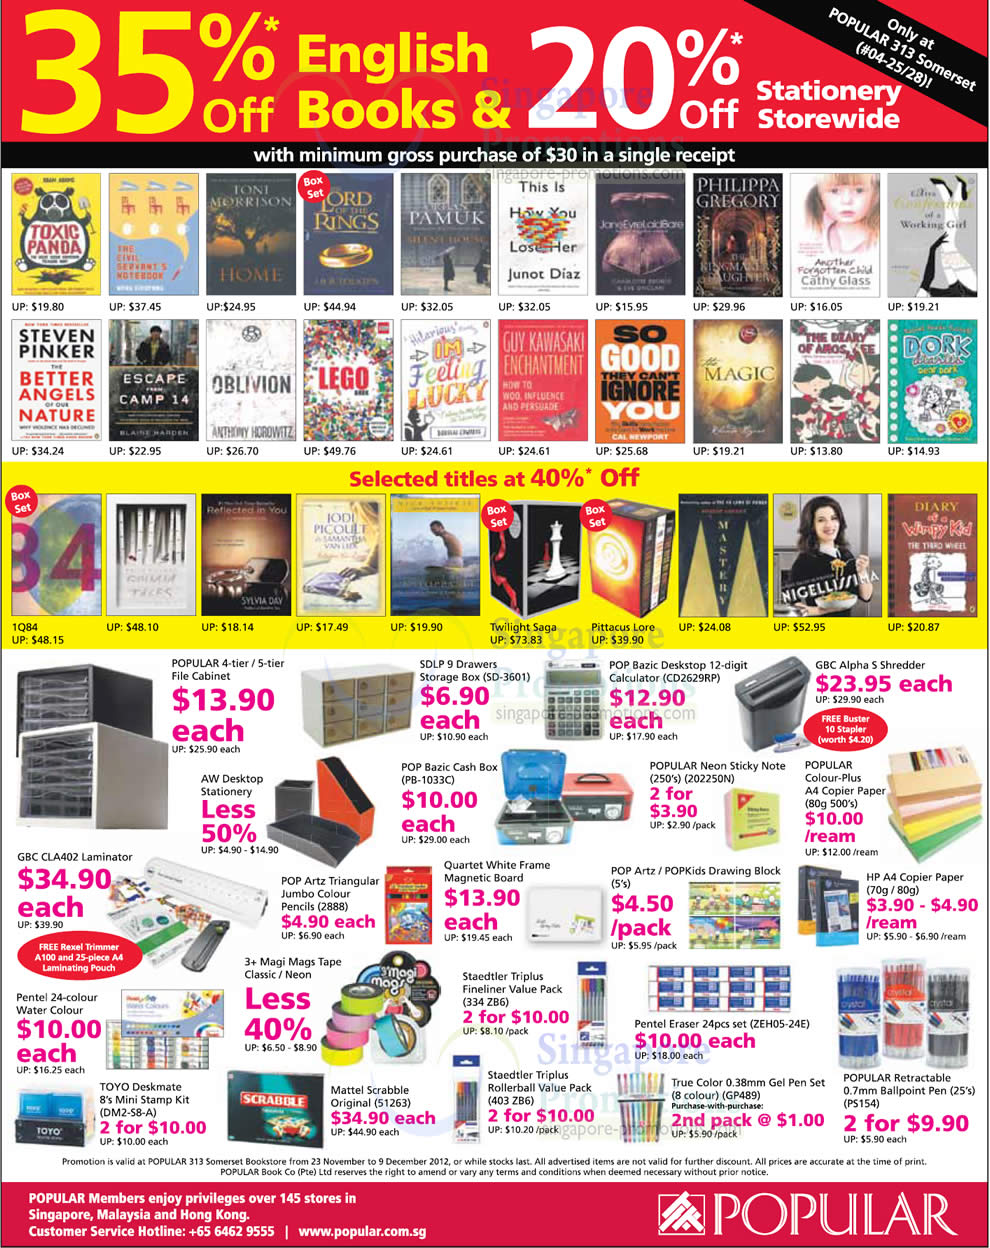 Featured image for Popular Bookstores 10% Off November Sale 23 Nov - 9 Dec 2012